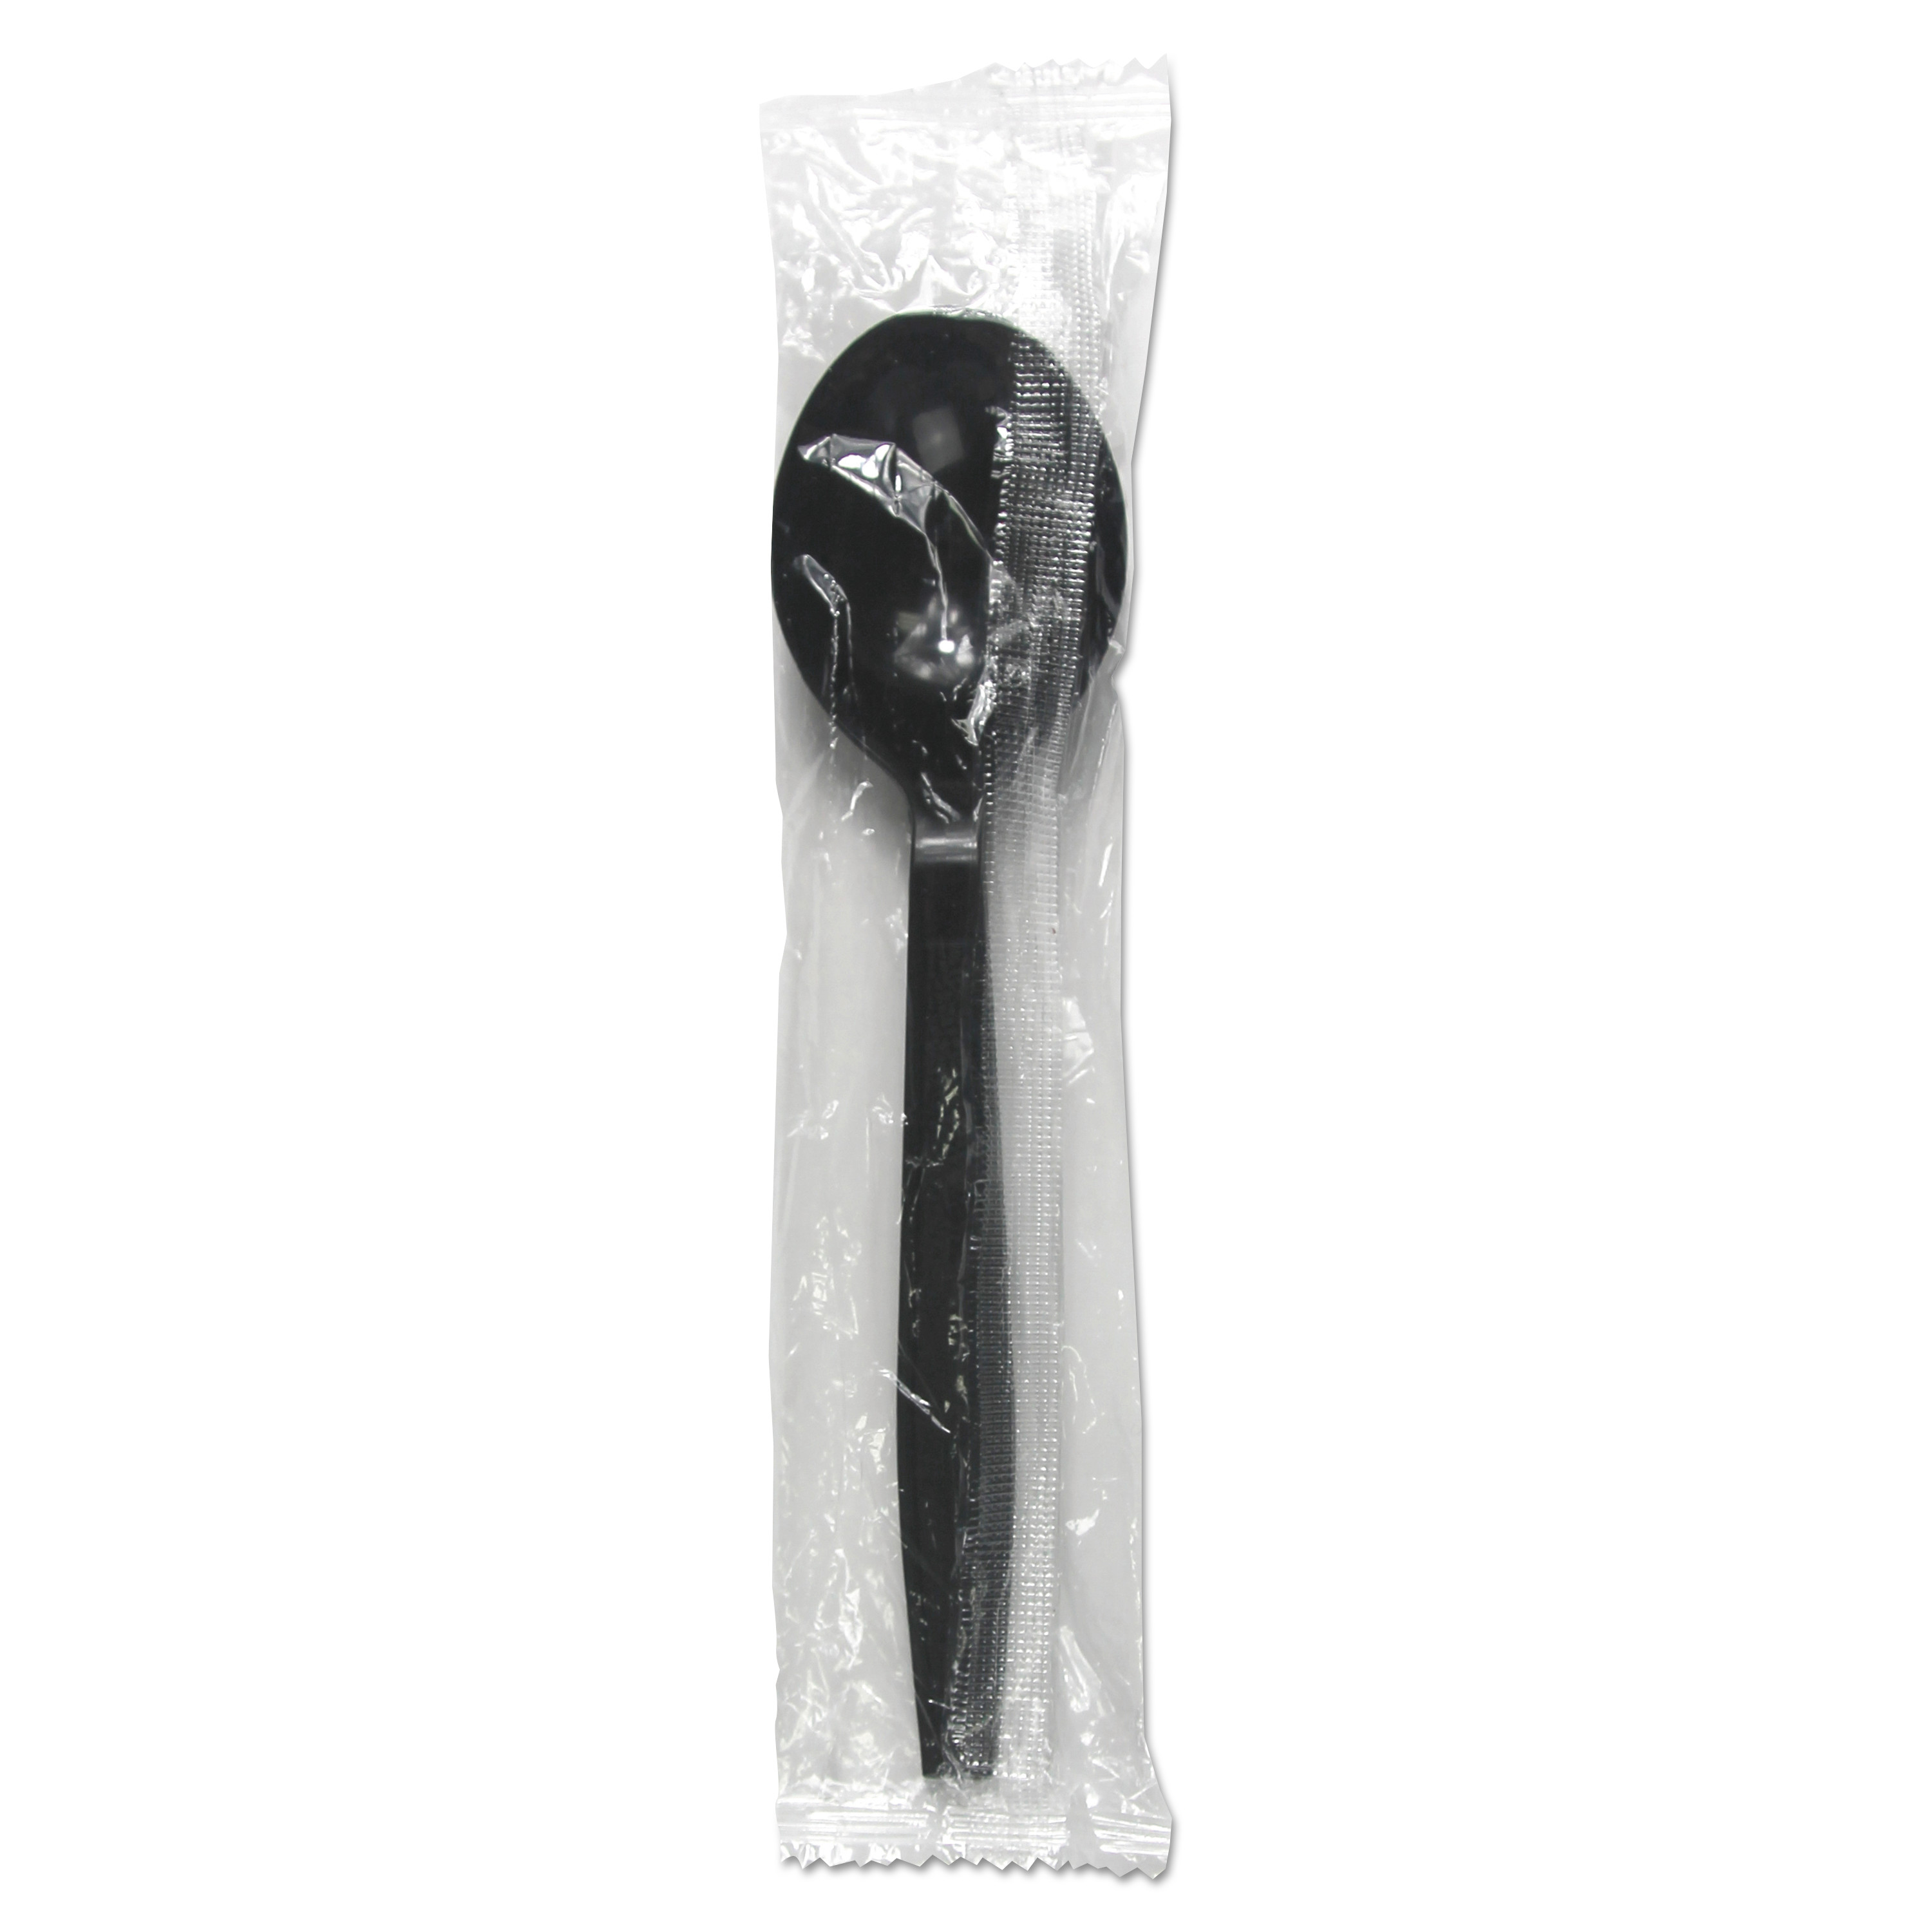 Heavyweight Wrapped Polypropylene Cutlery, Soup Spoon, White, 1000/Carton